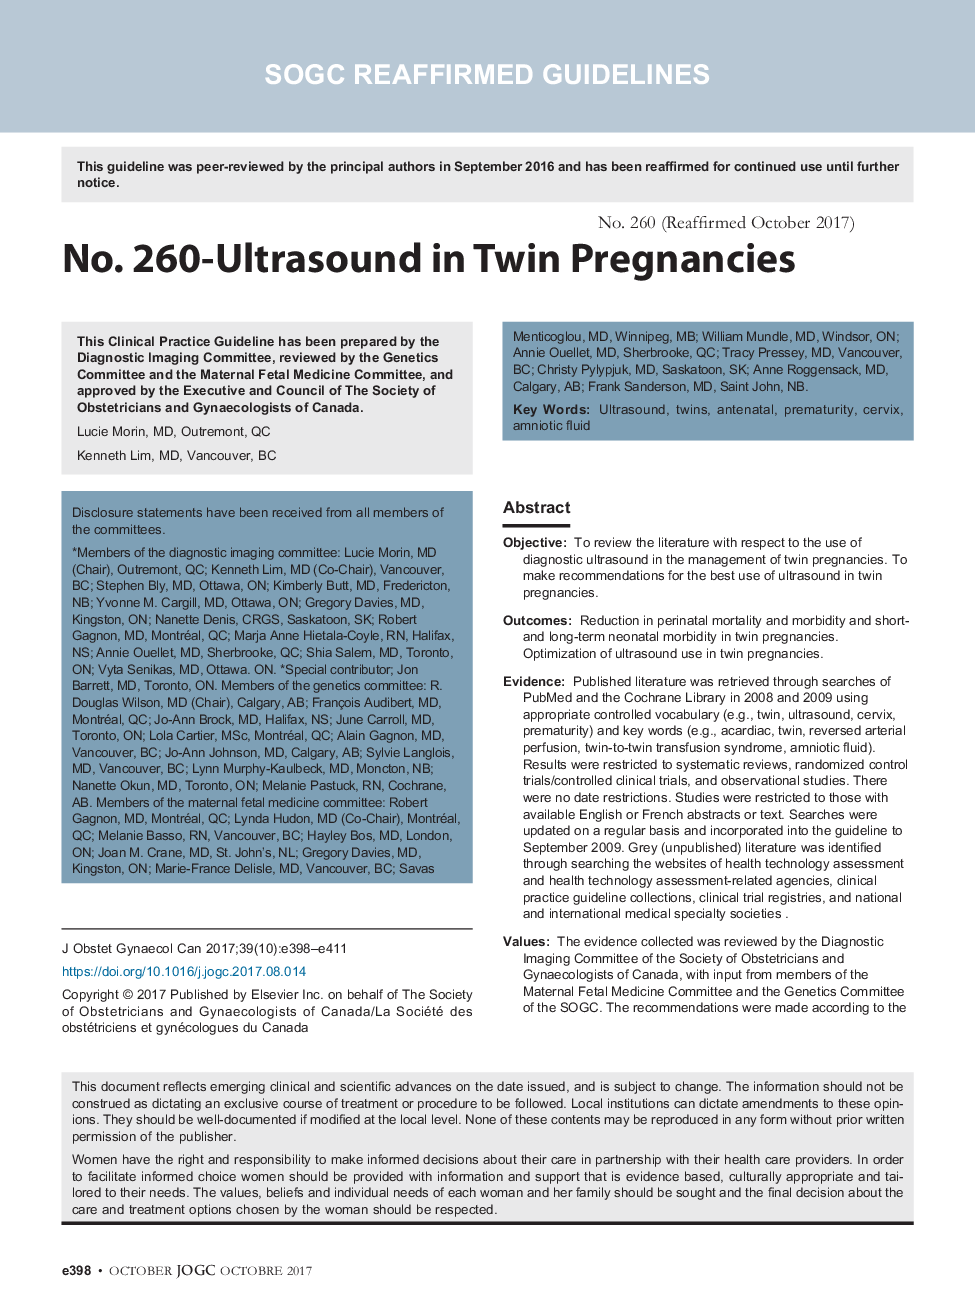 No. 260-Ultrasound in Twin Pregnancies